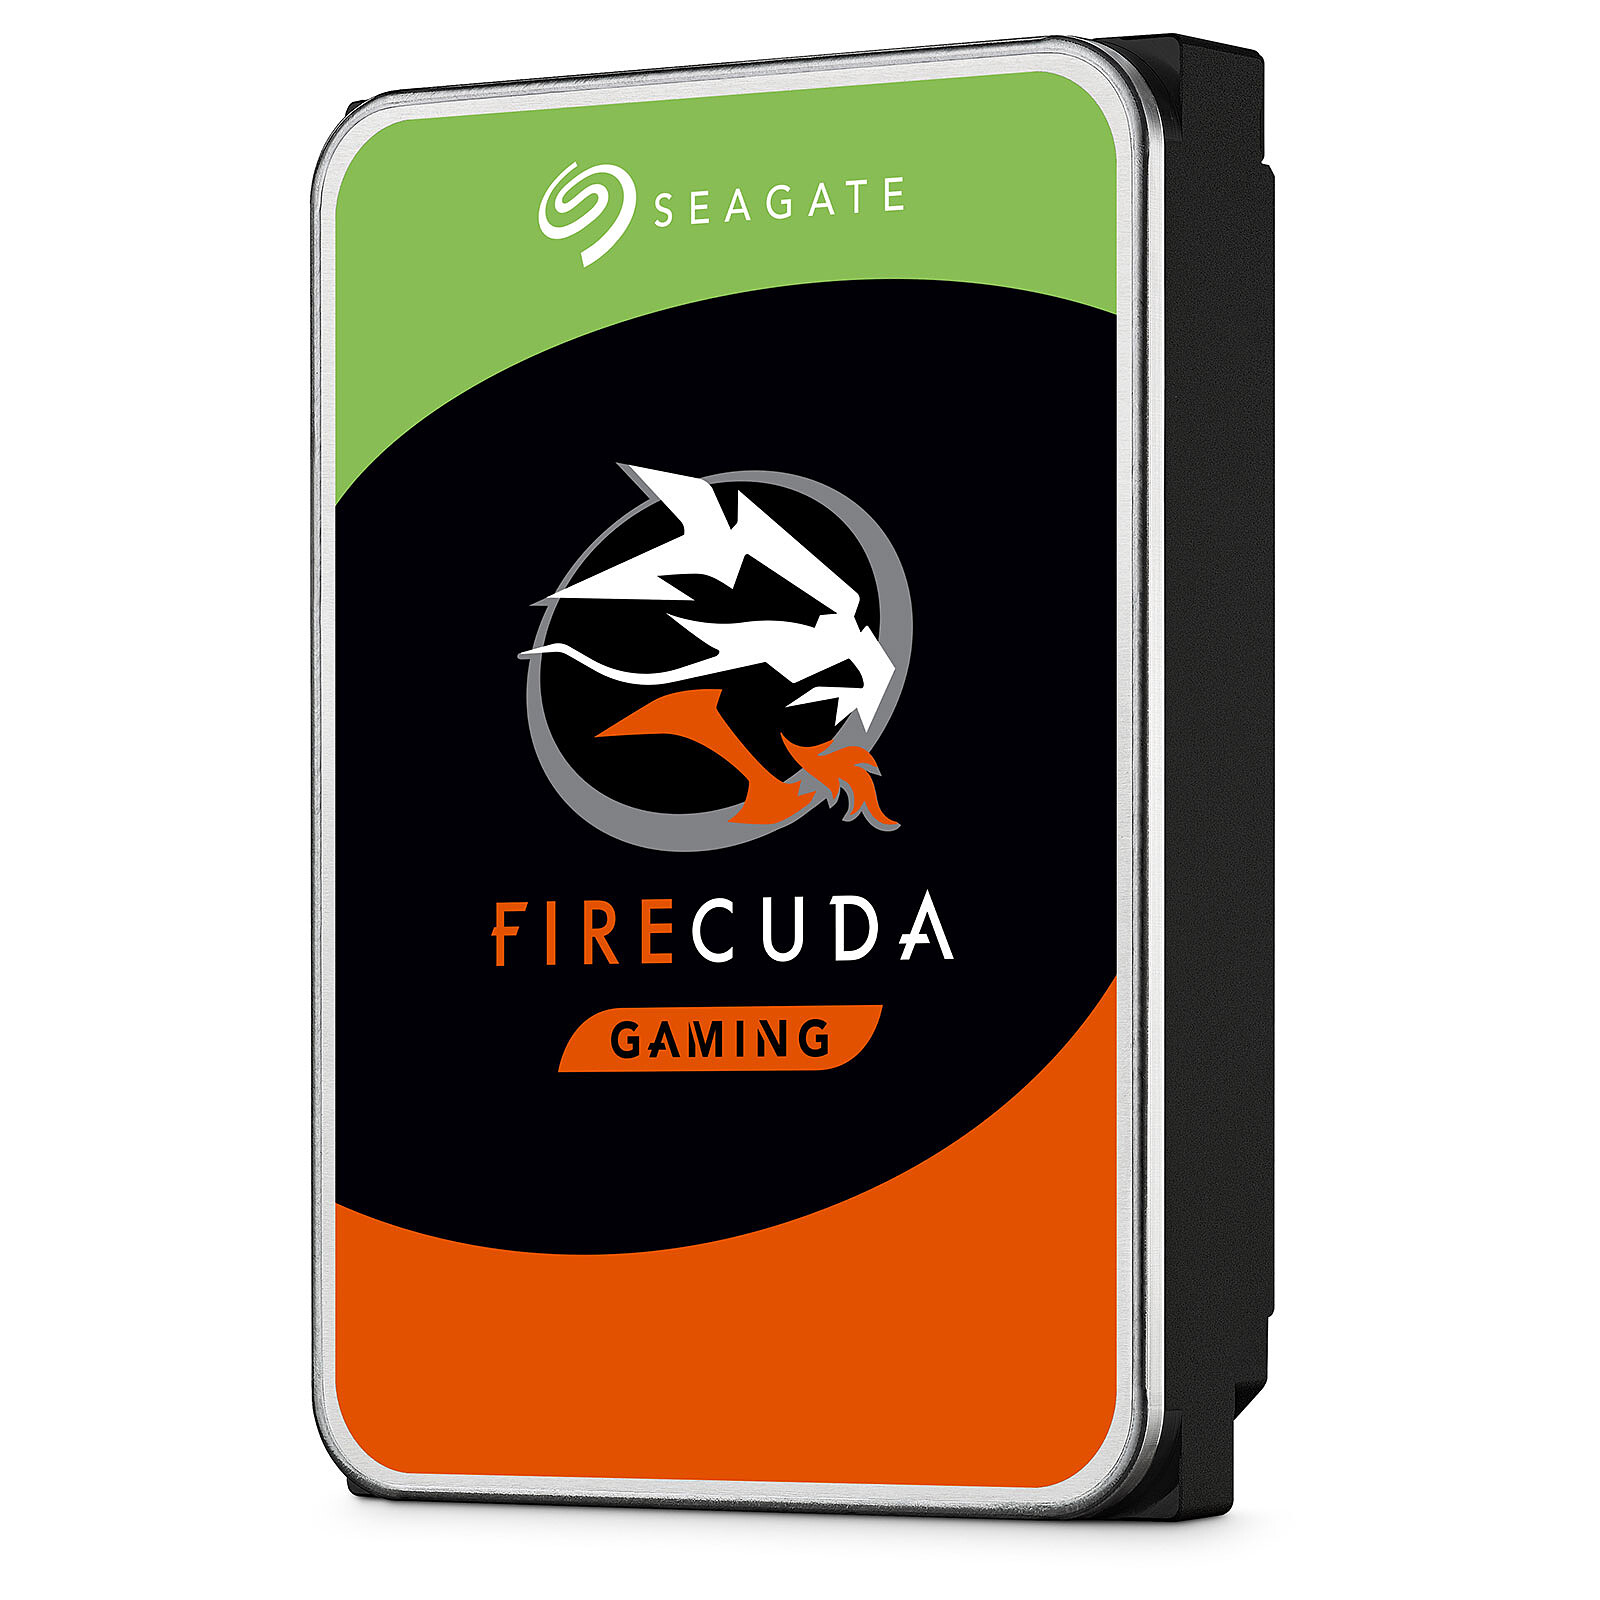 Seagate FireCuda Gaming HDD 2 To - Disque dur externe - Garantie 3 ans LDLC